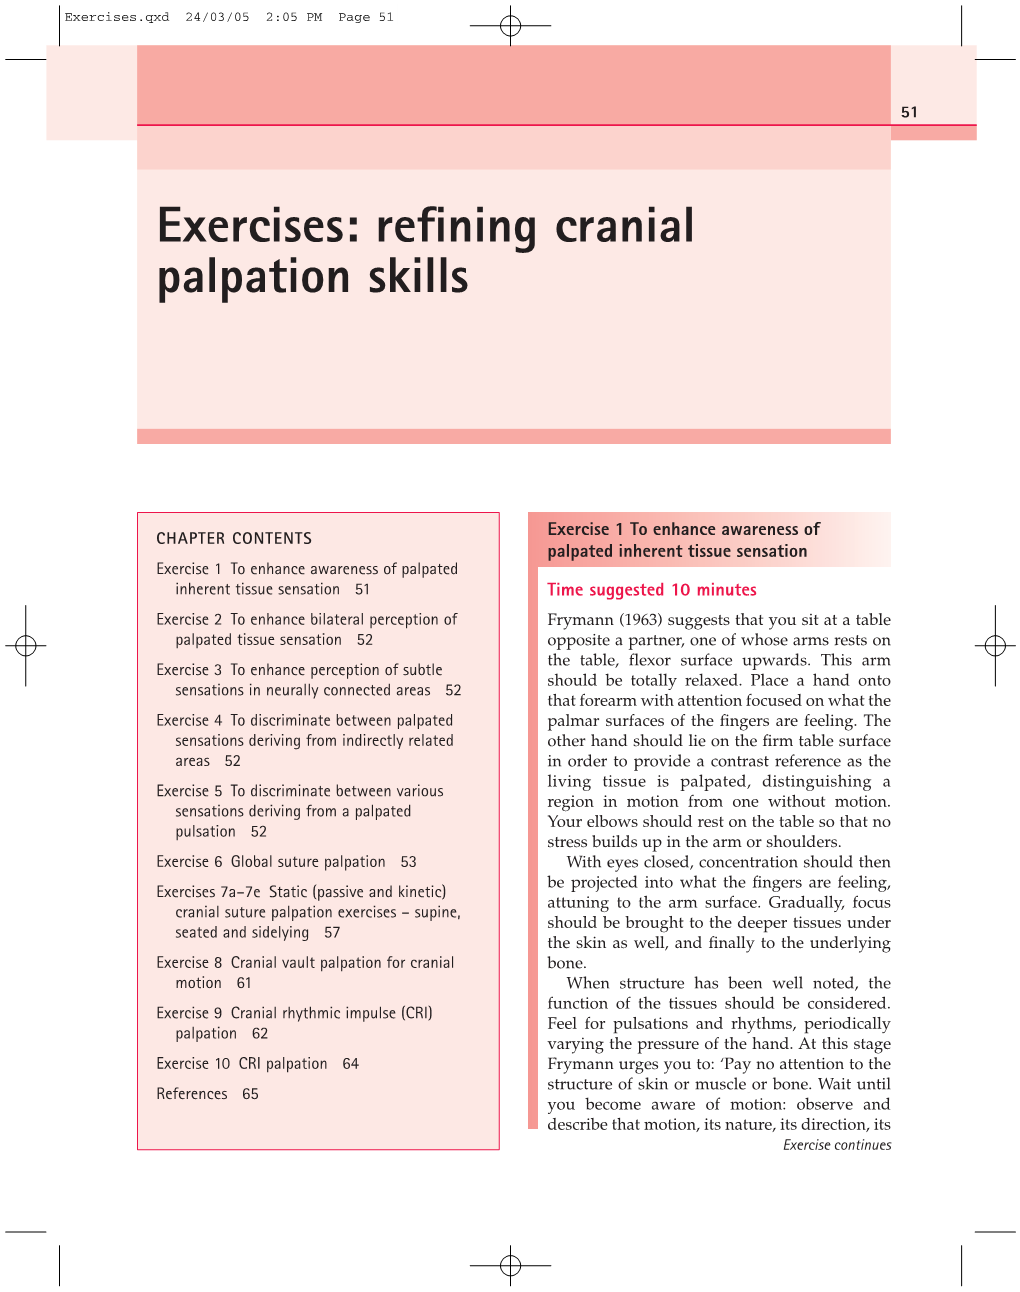 Exercises: Refining Cranial Palpation Skills